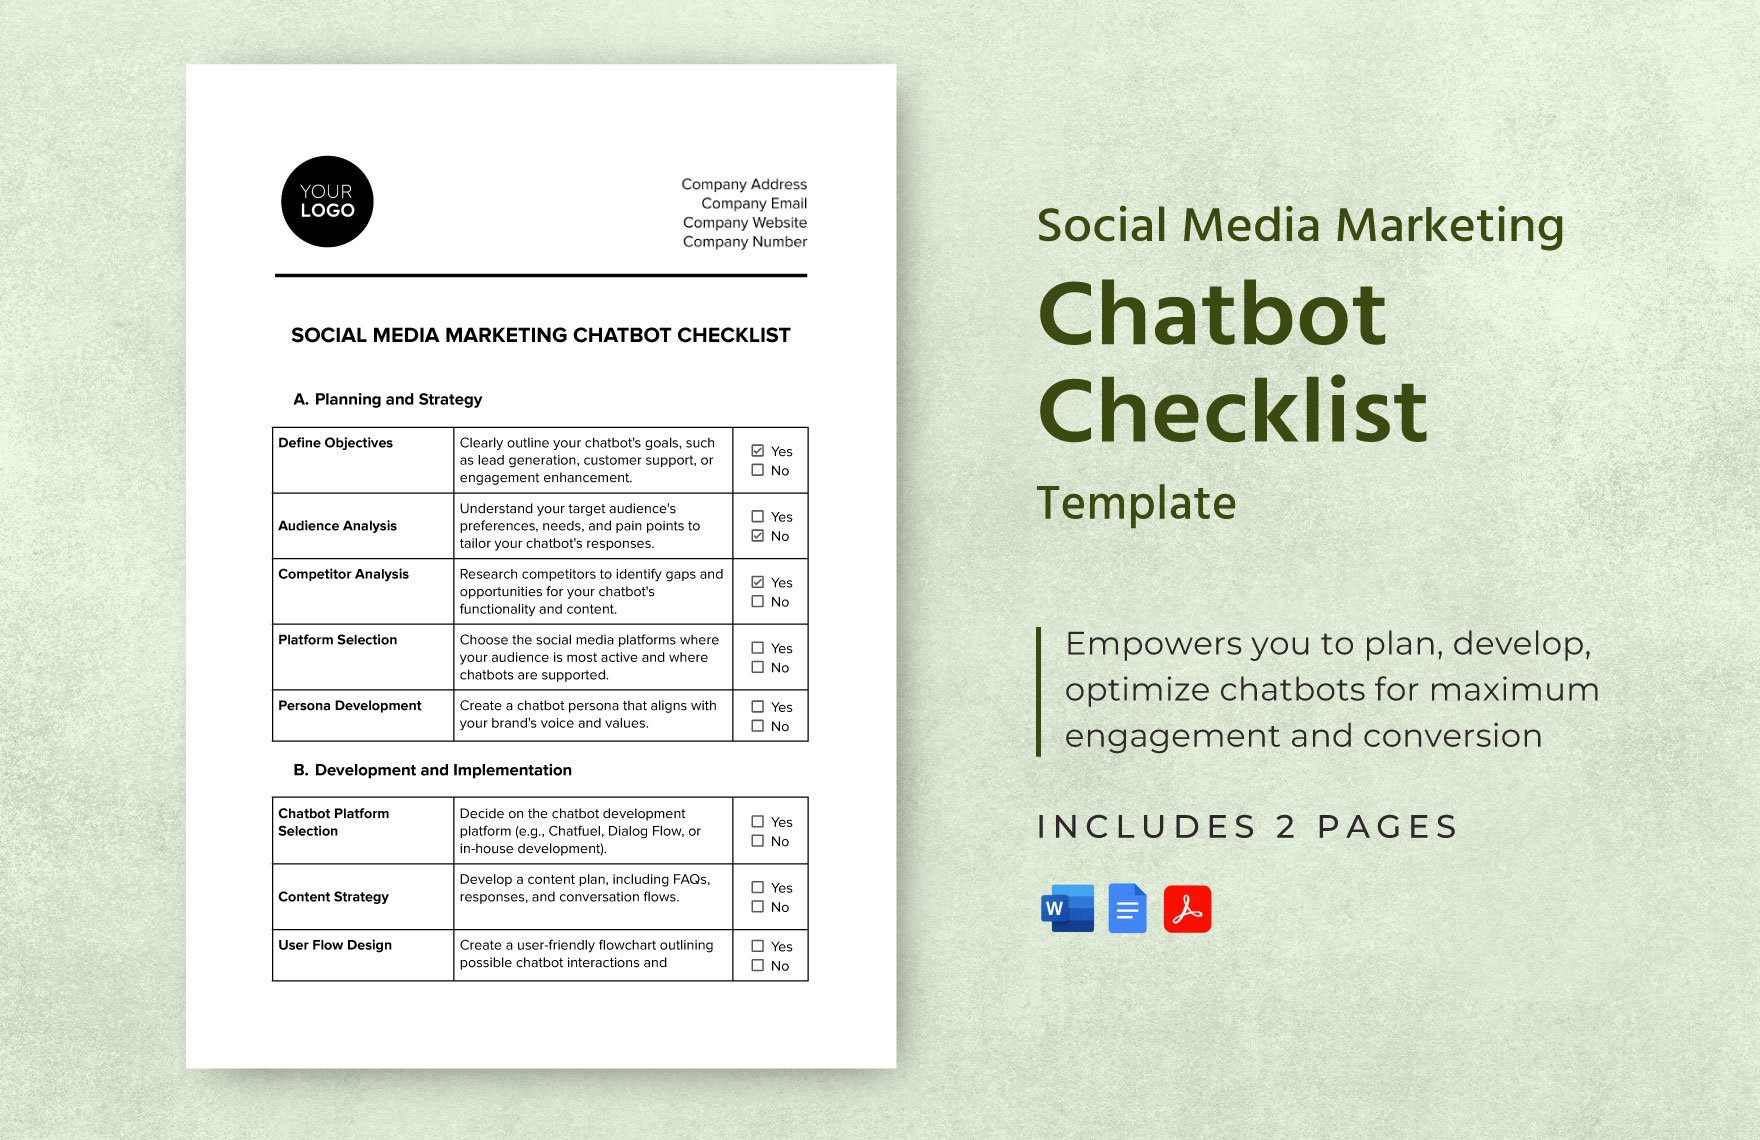 Social Media Marketing Chatbot Checklist Template in Word, Google Docs, PDF